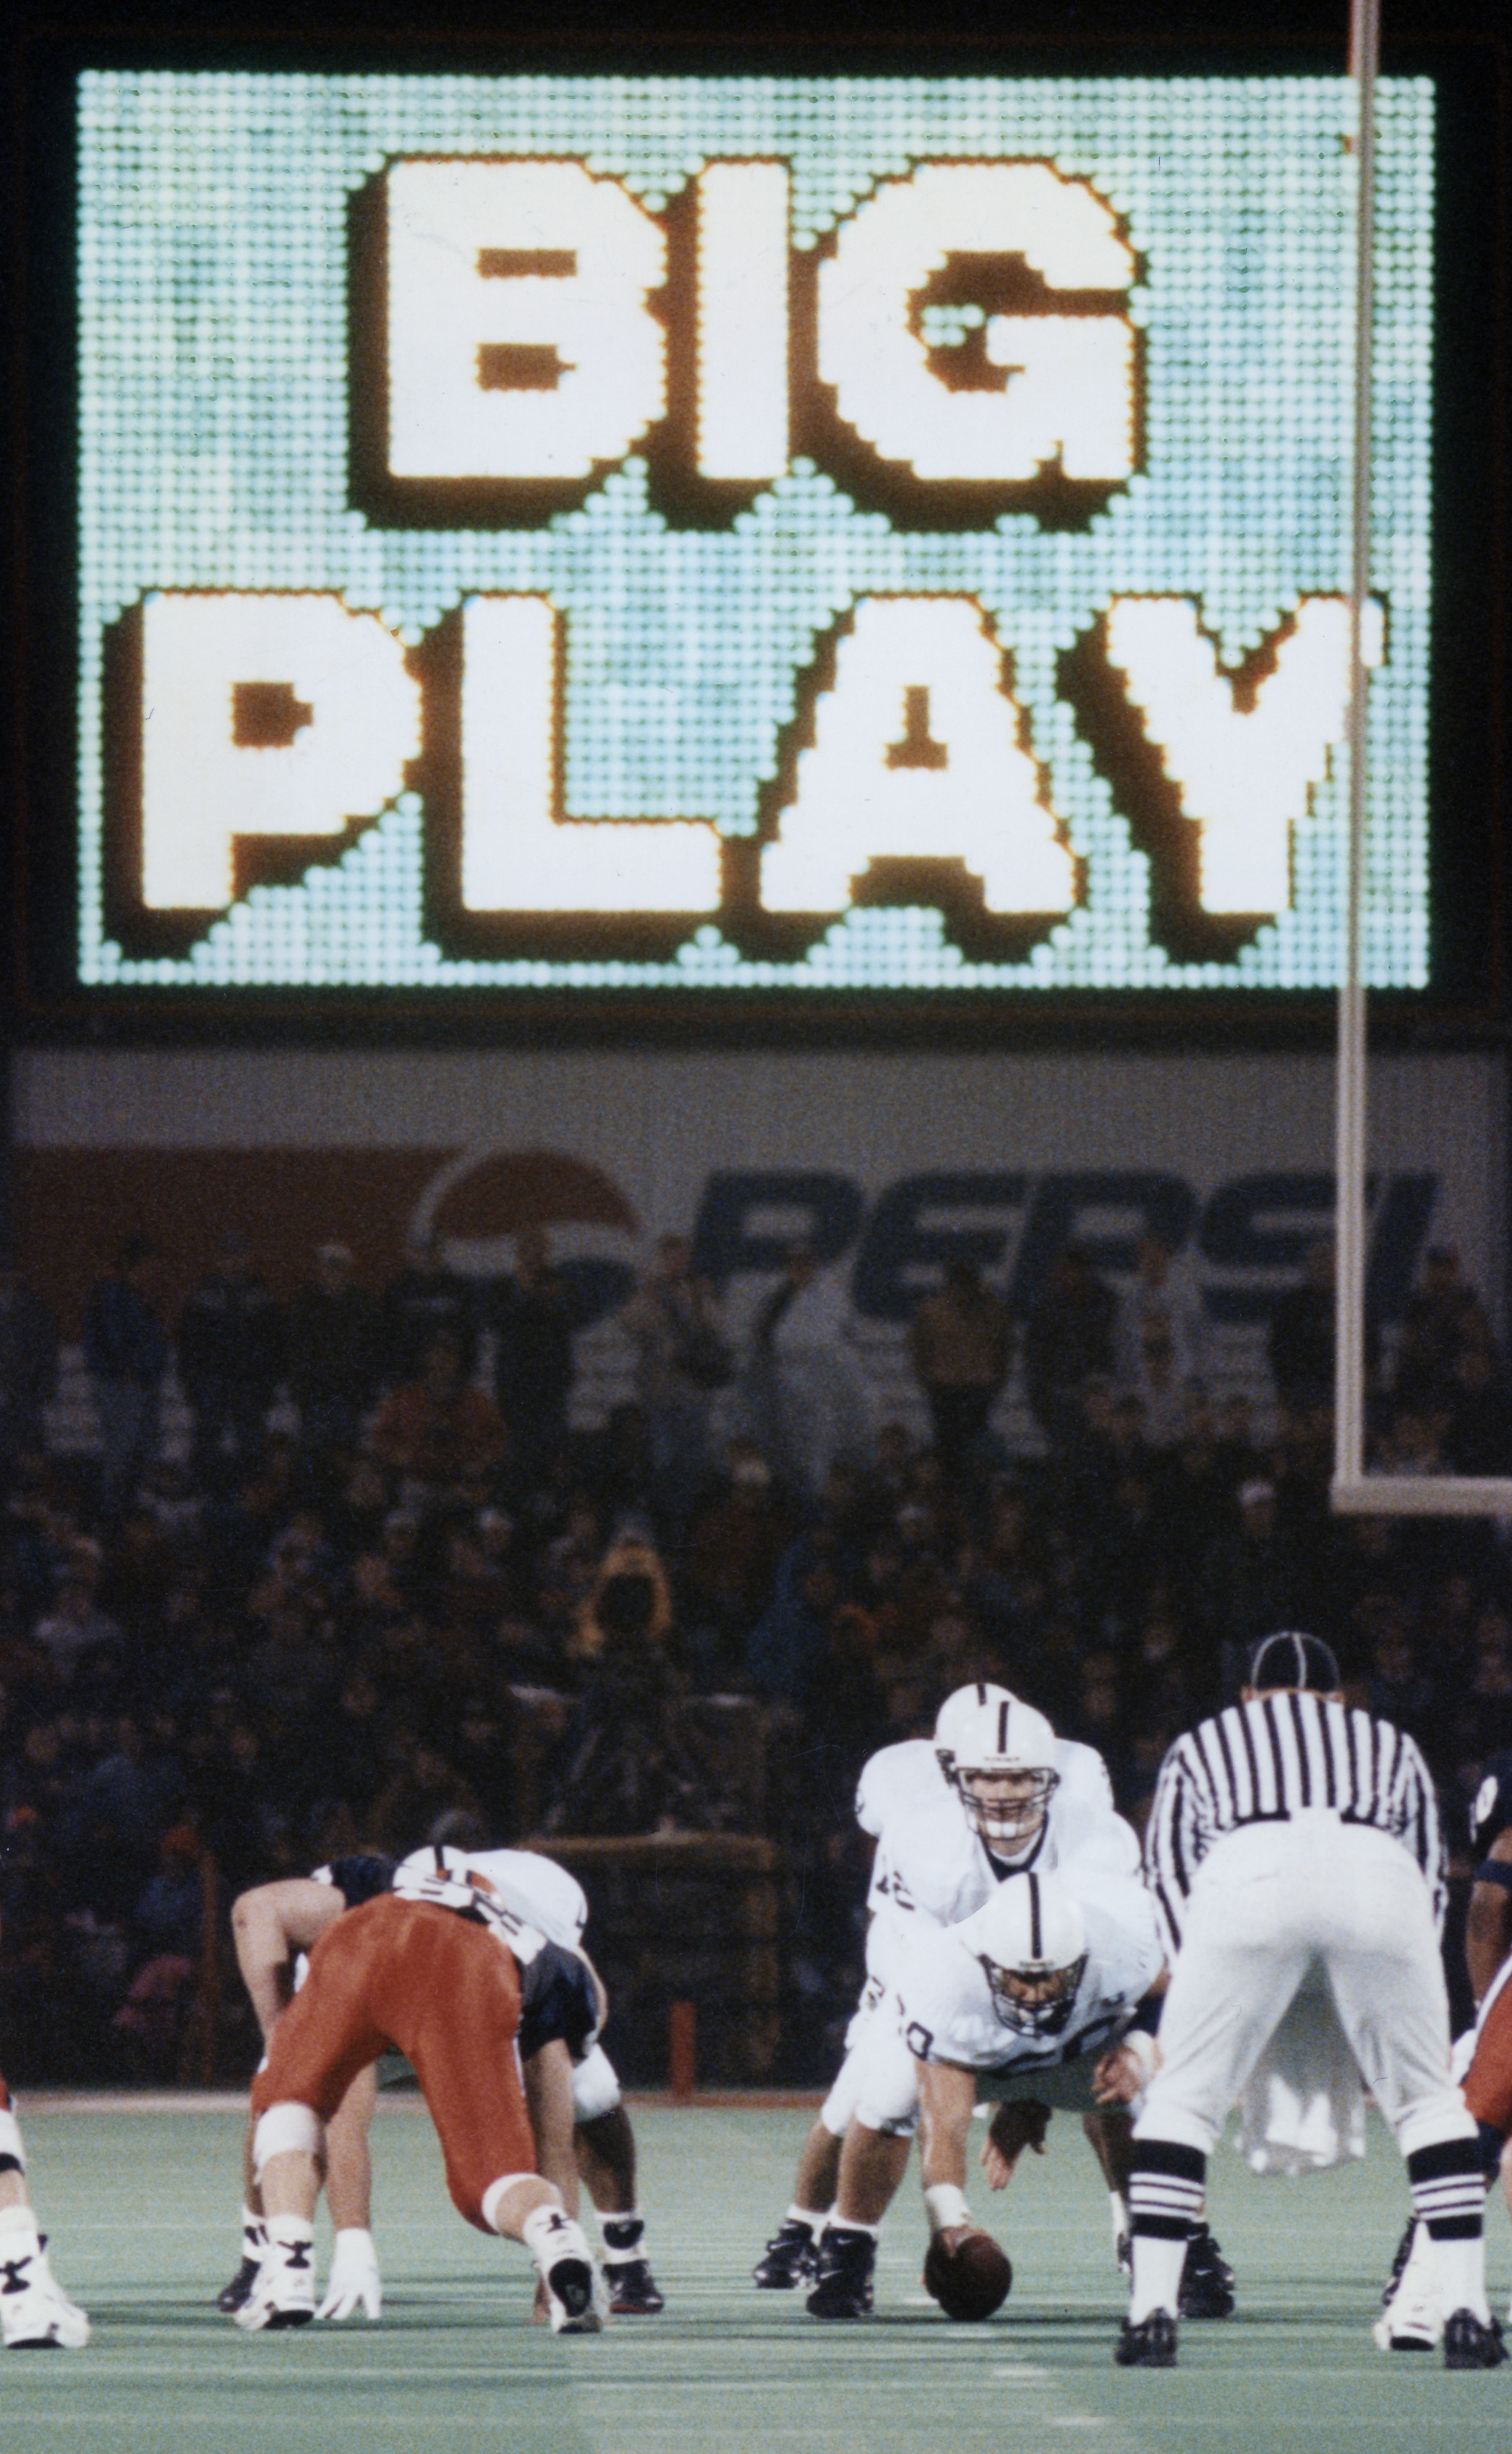 Lions driving under Big Play on the big screen, photo by Steve Manuel '84 Lib, '92 MA Com